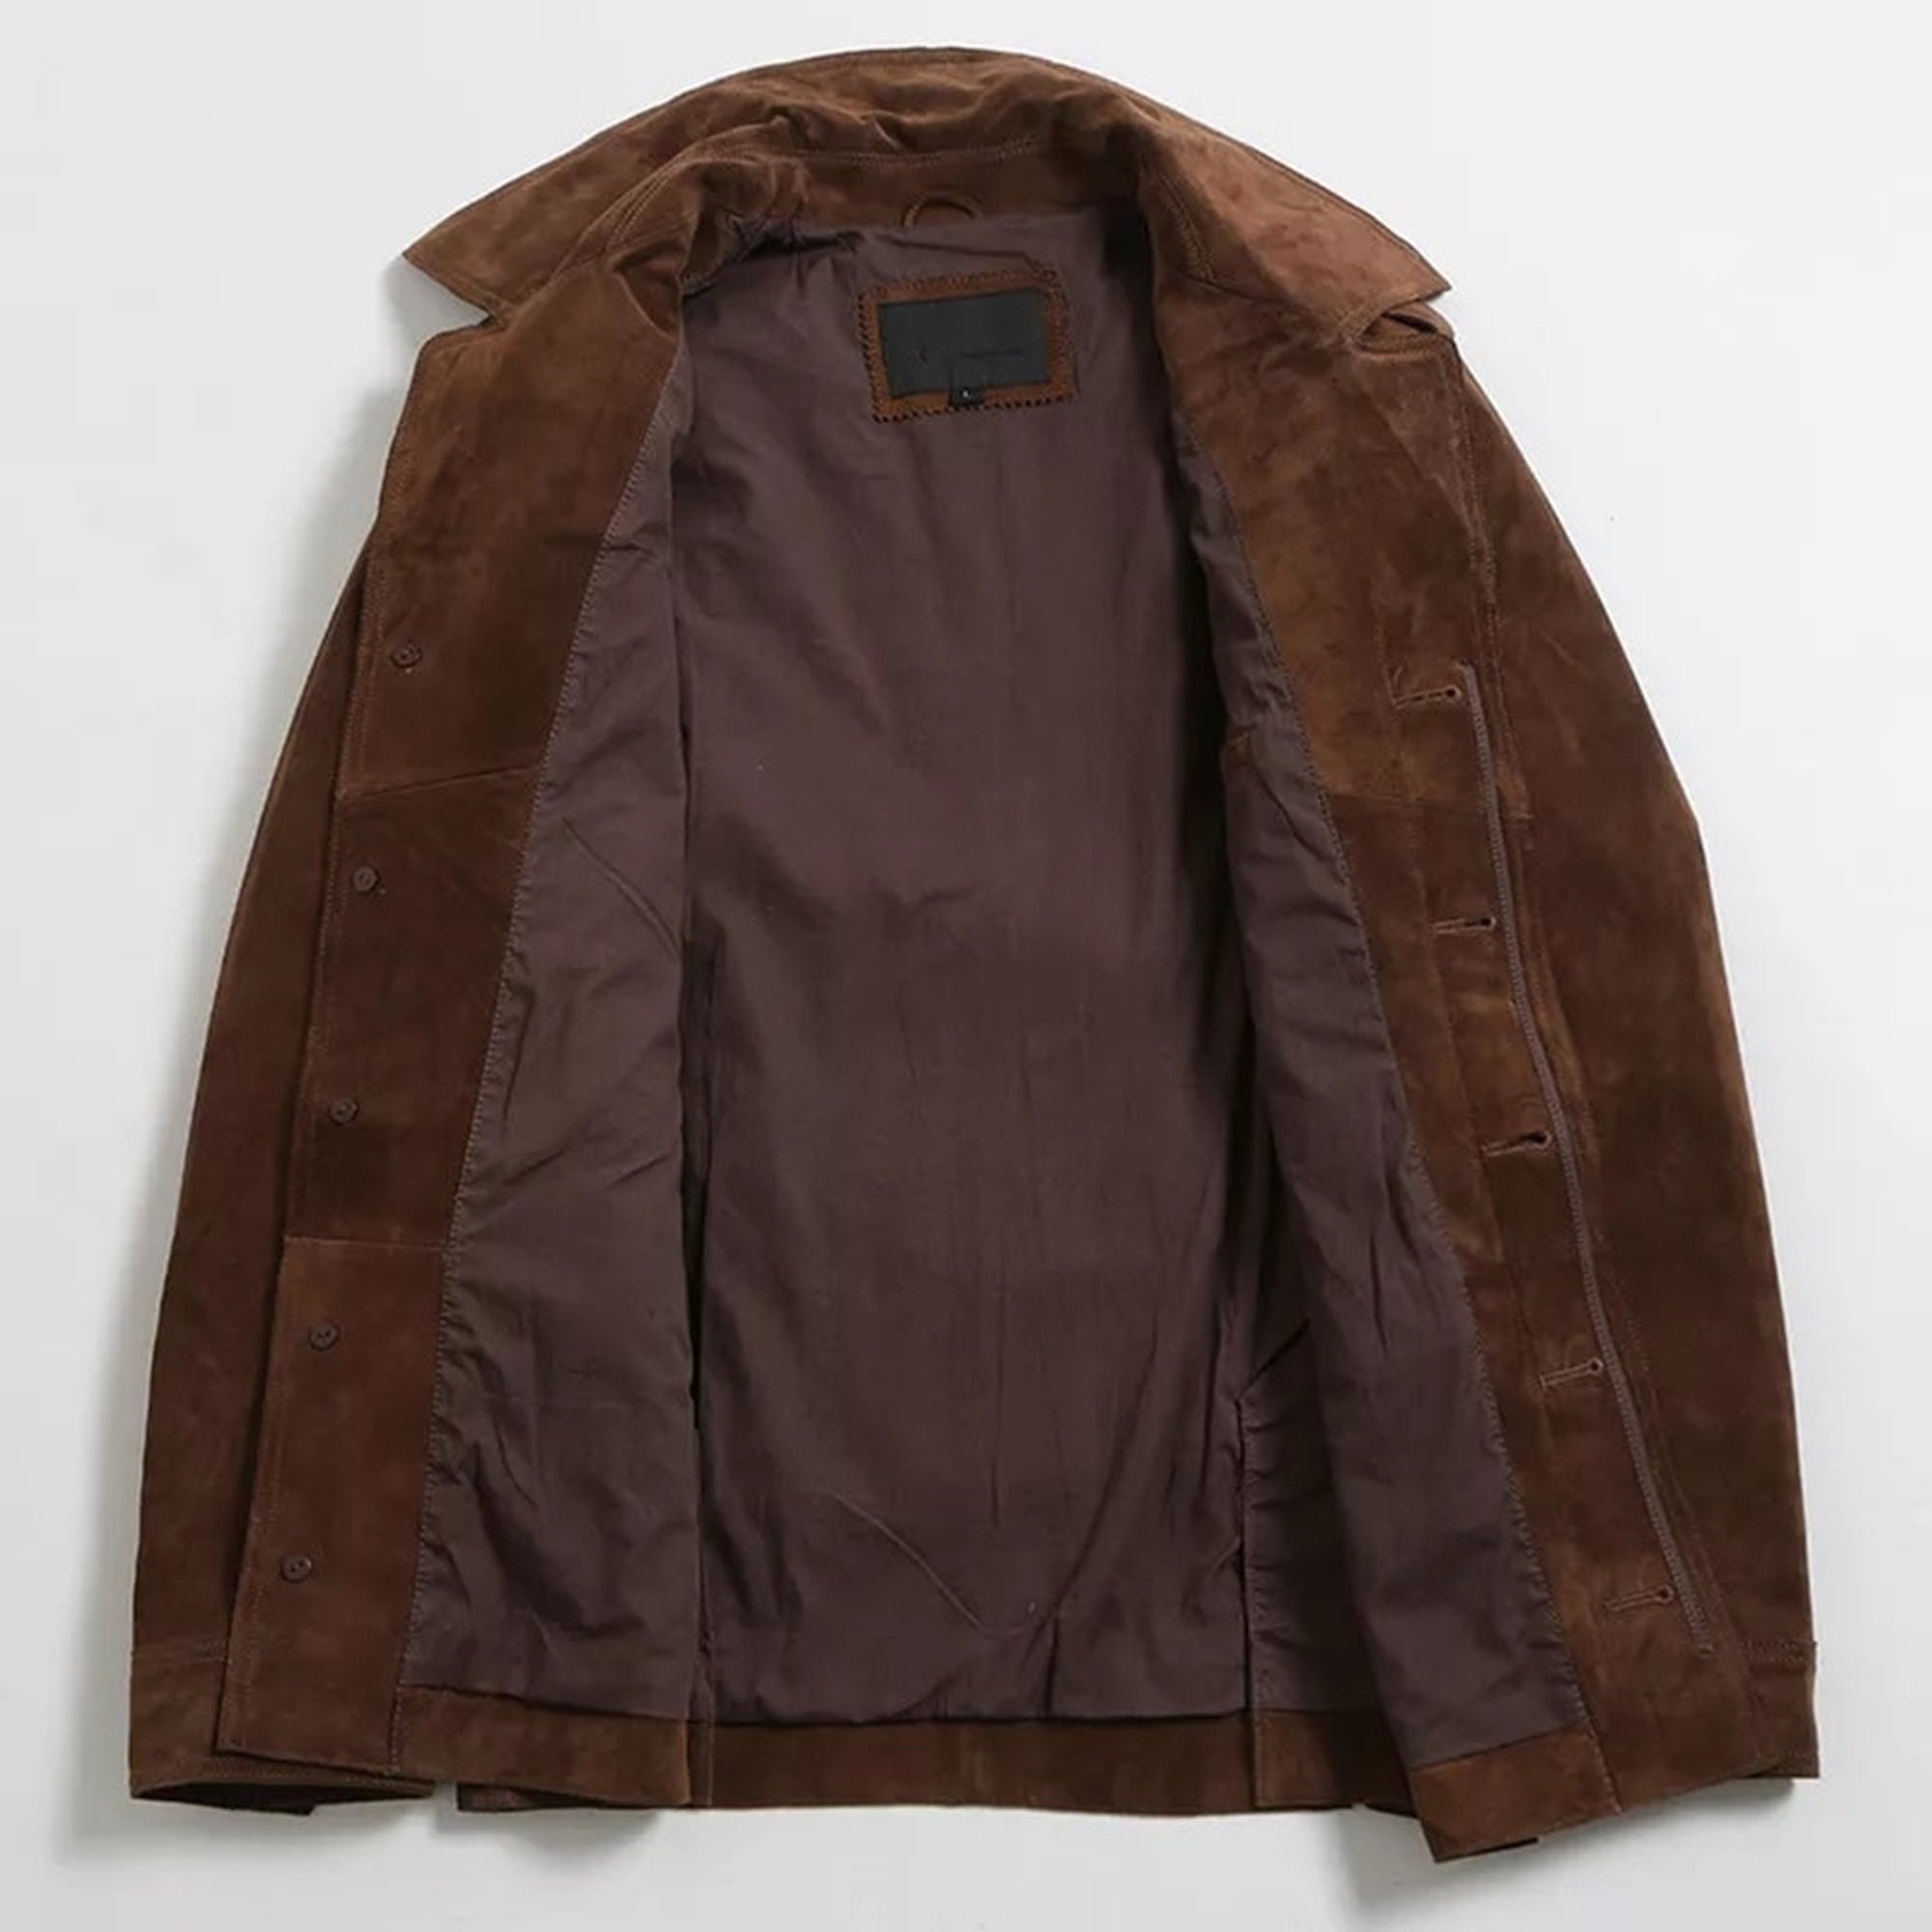 Men's Shirt Suede Leather Jacket